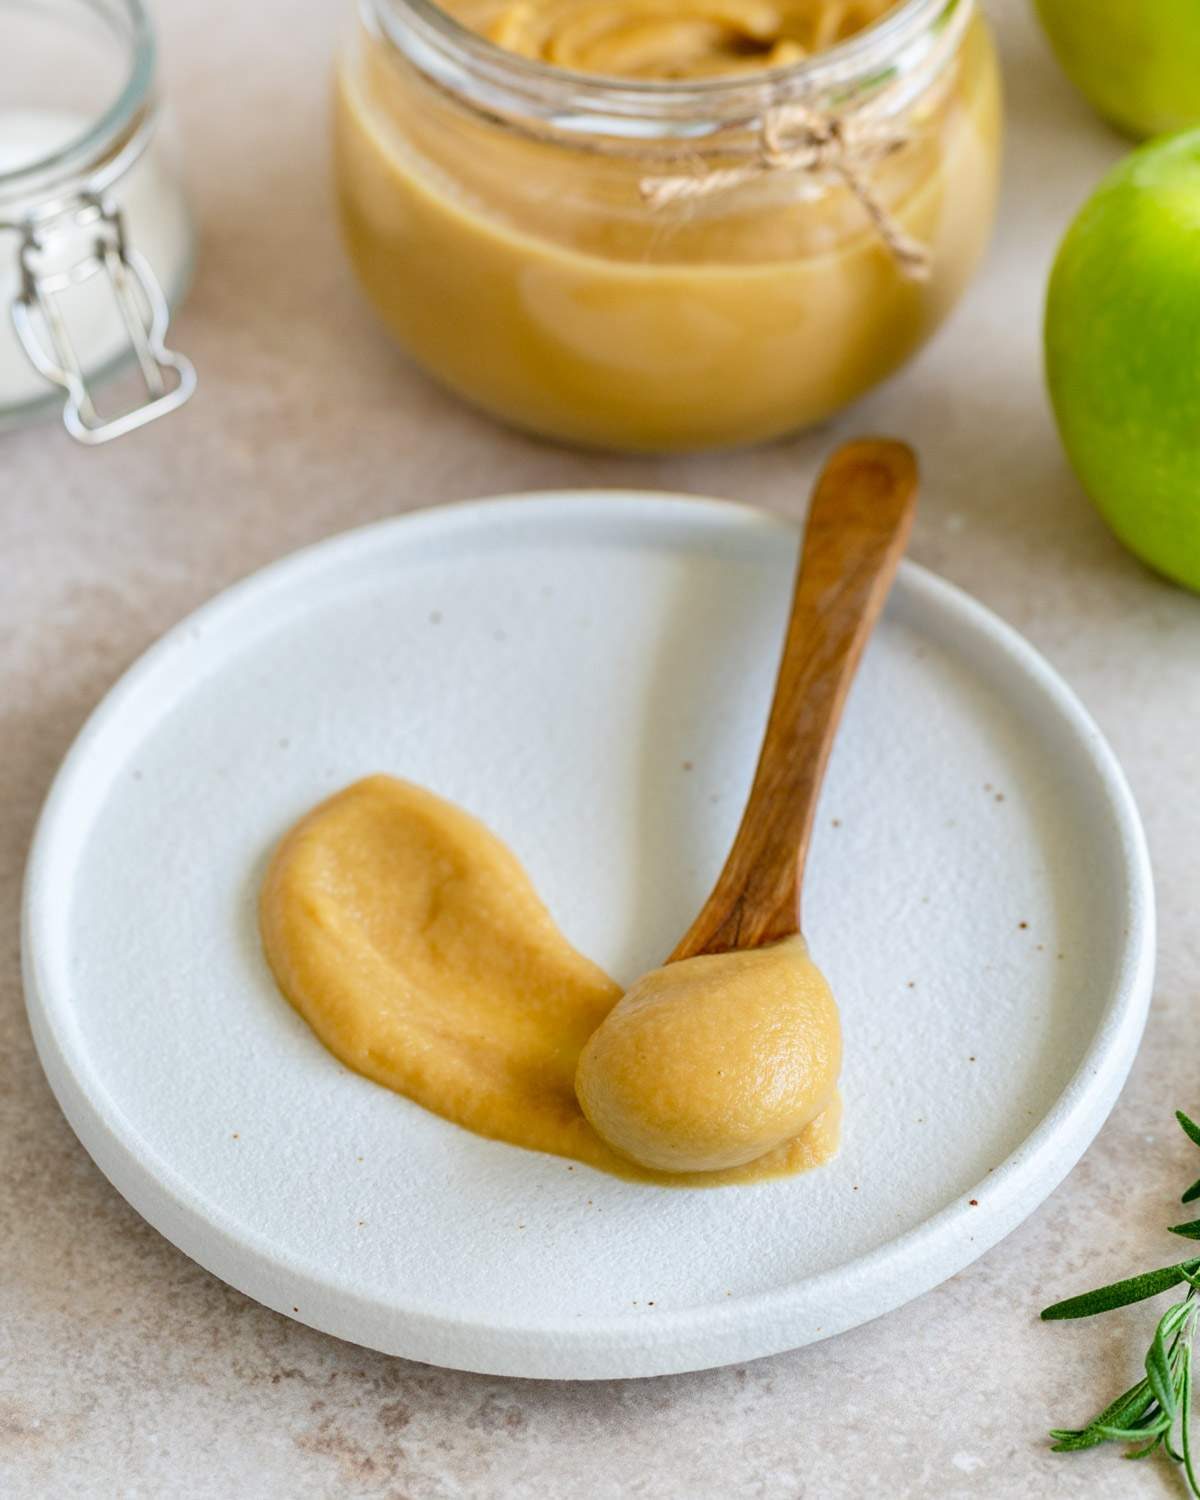 Apple caramel sauce consistency